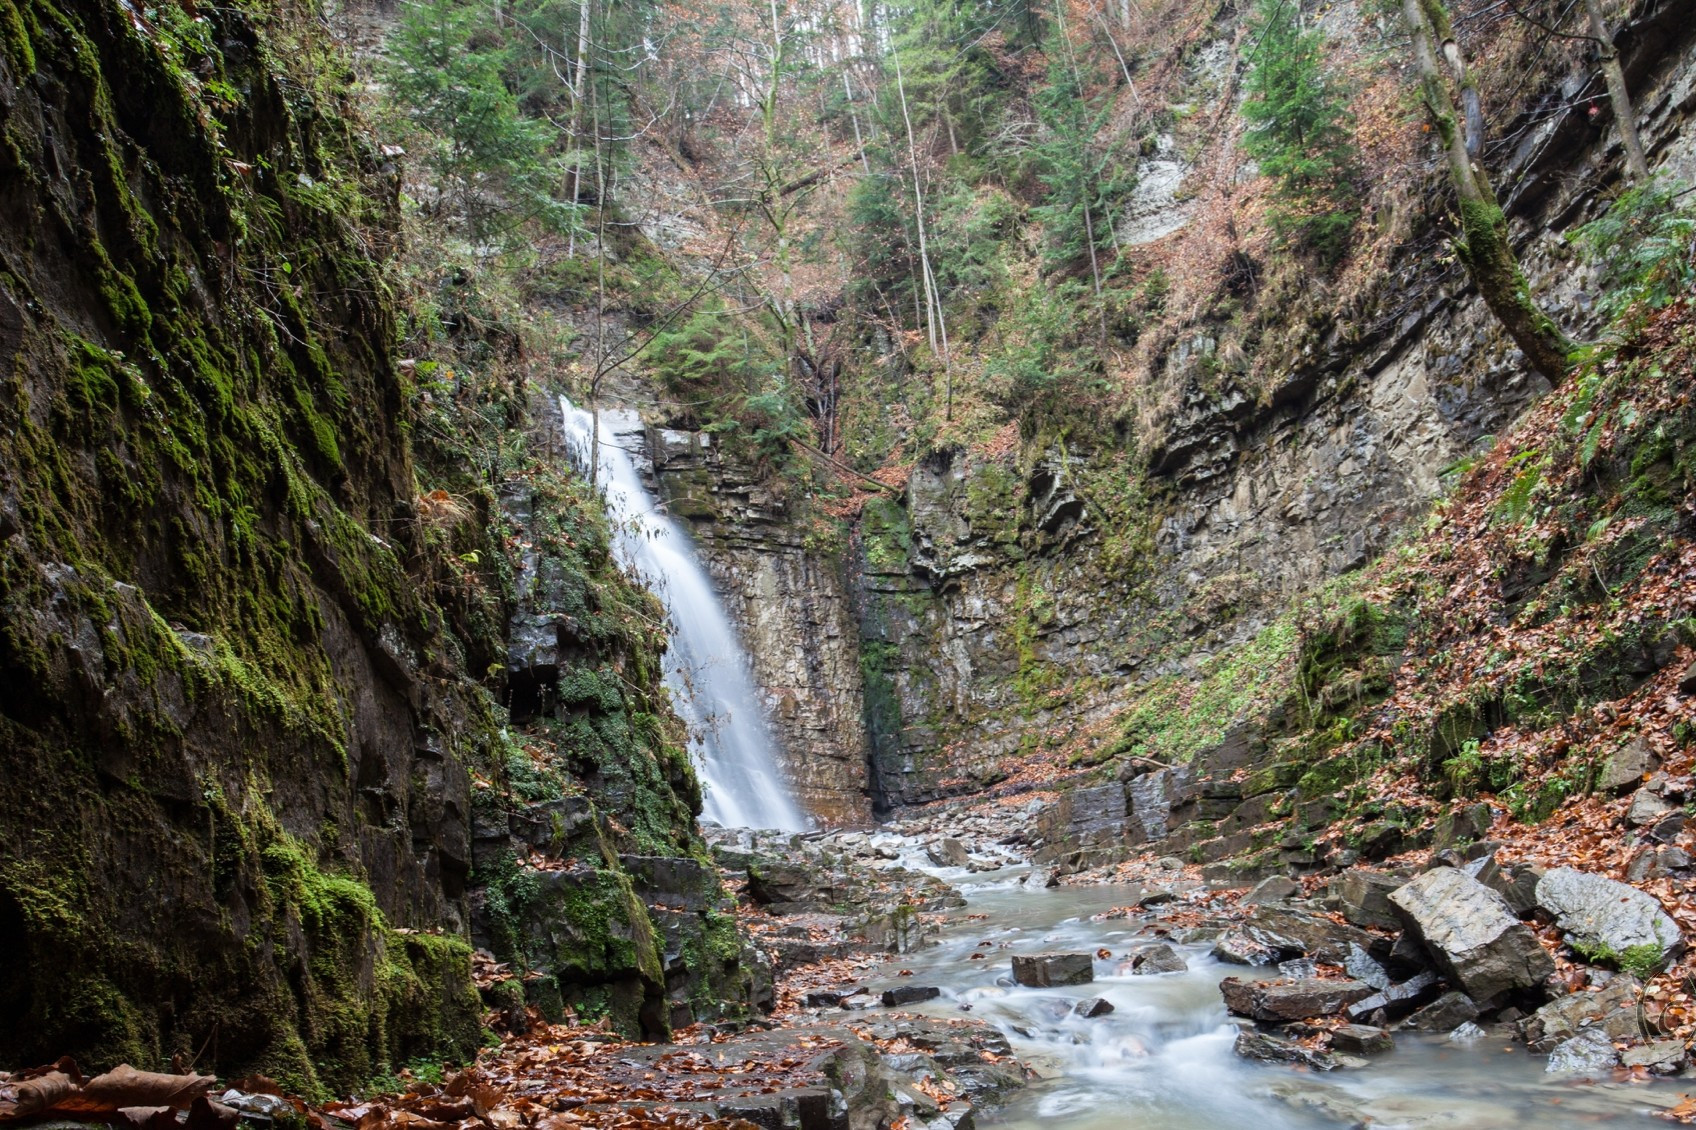 Manyavsky waterfall is one of the highest in Ukraine